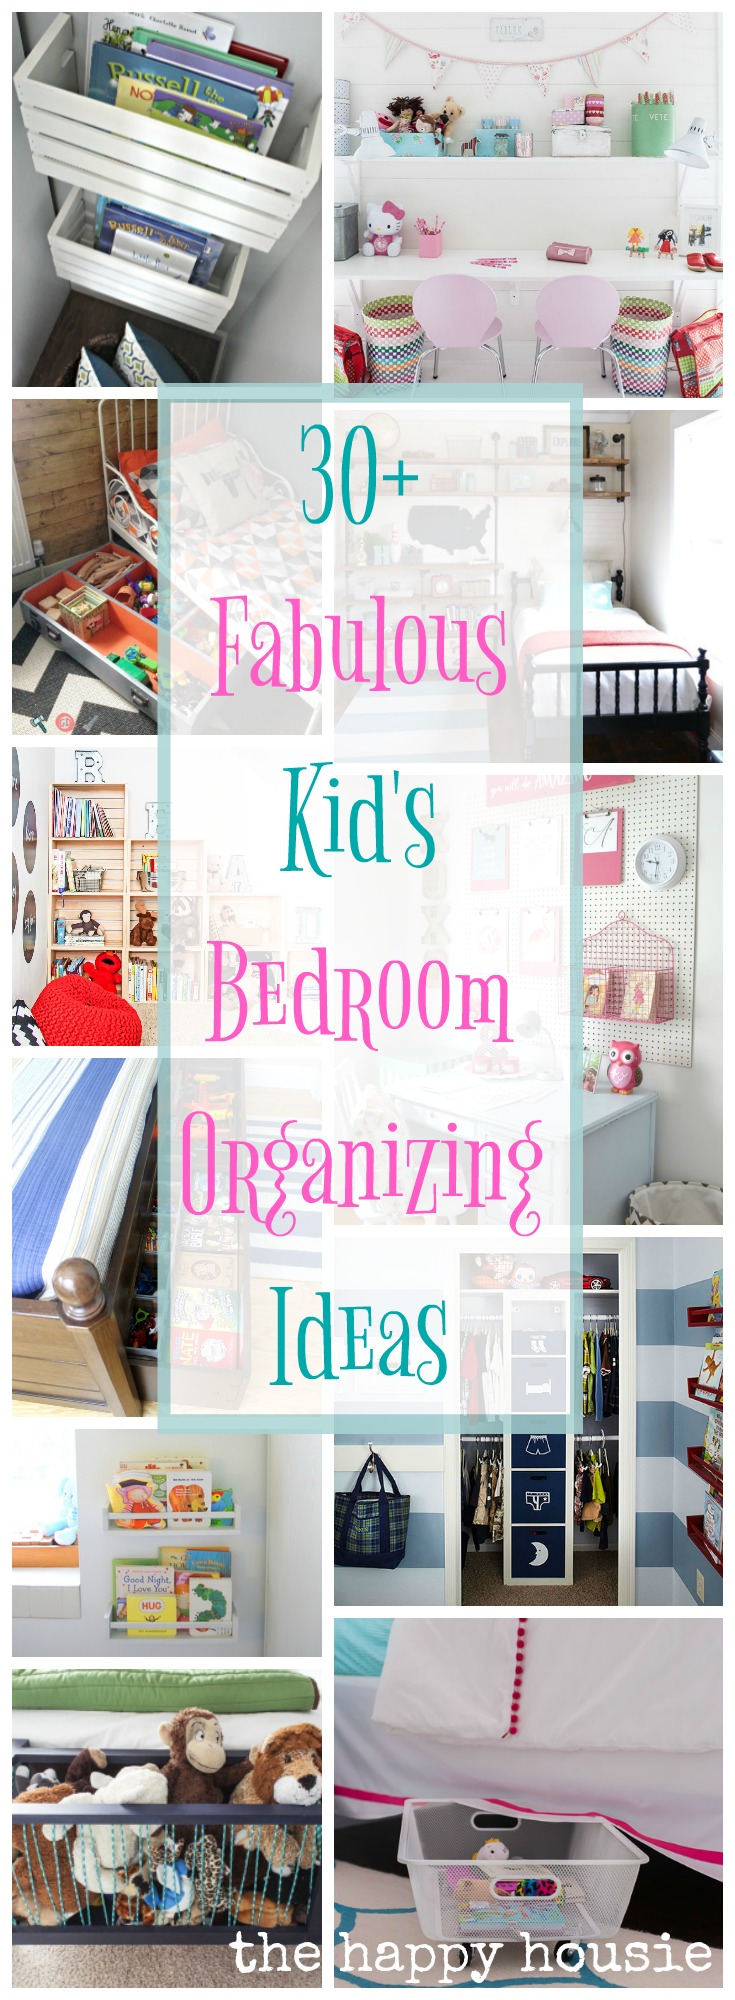 kids bedroom organizer